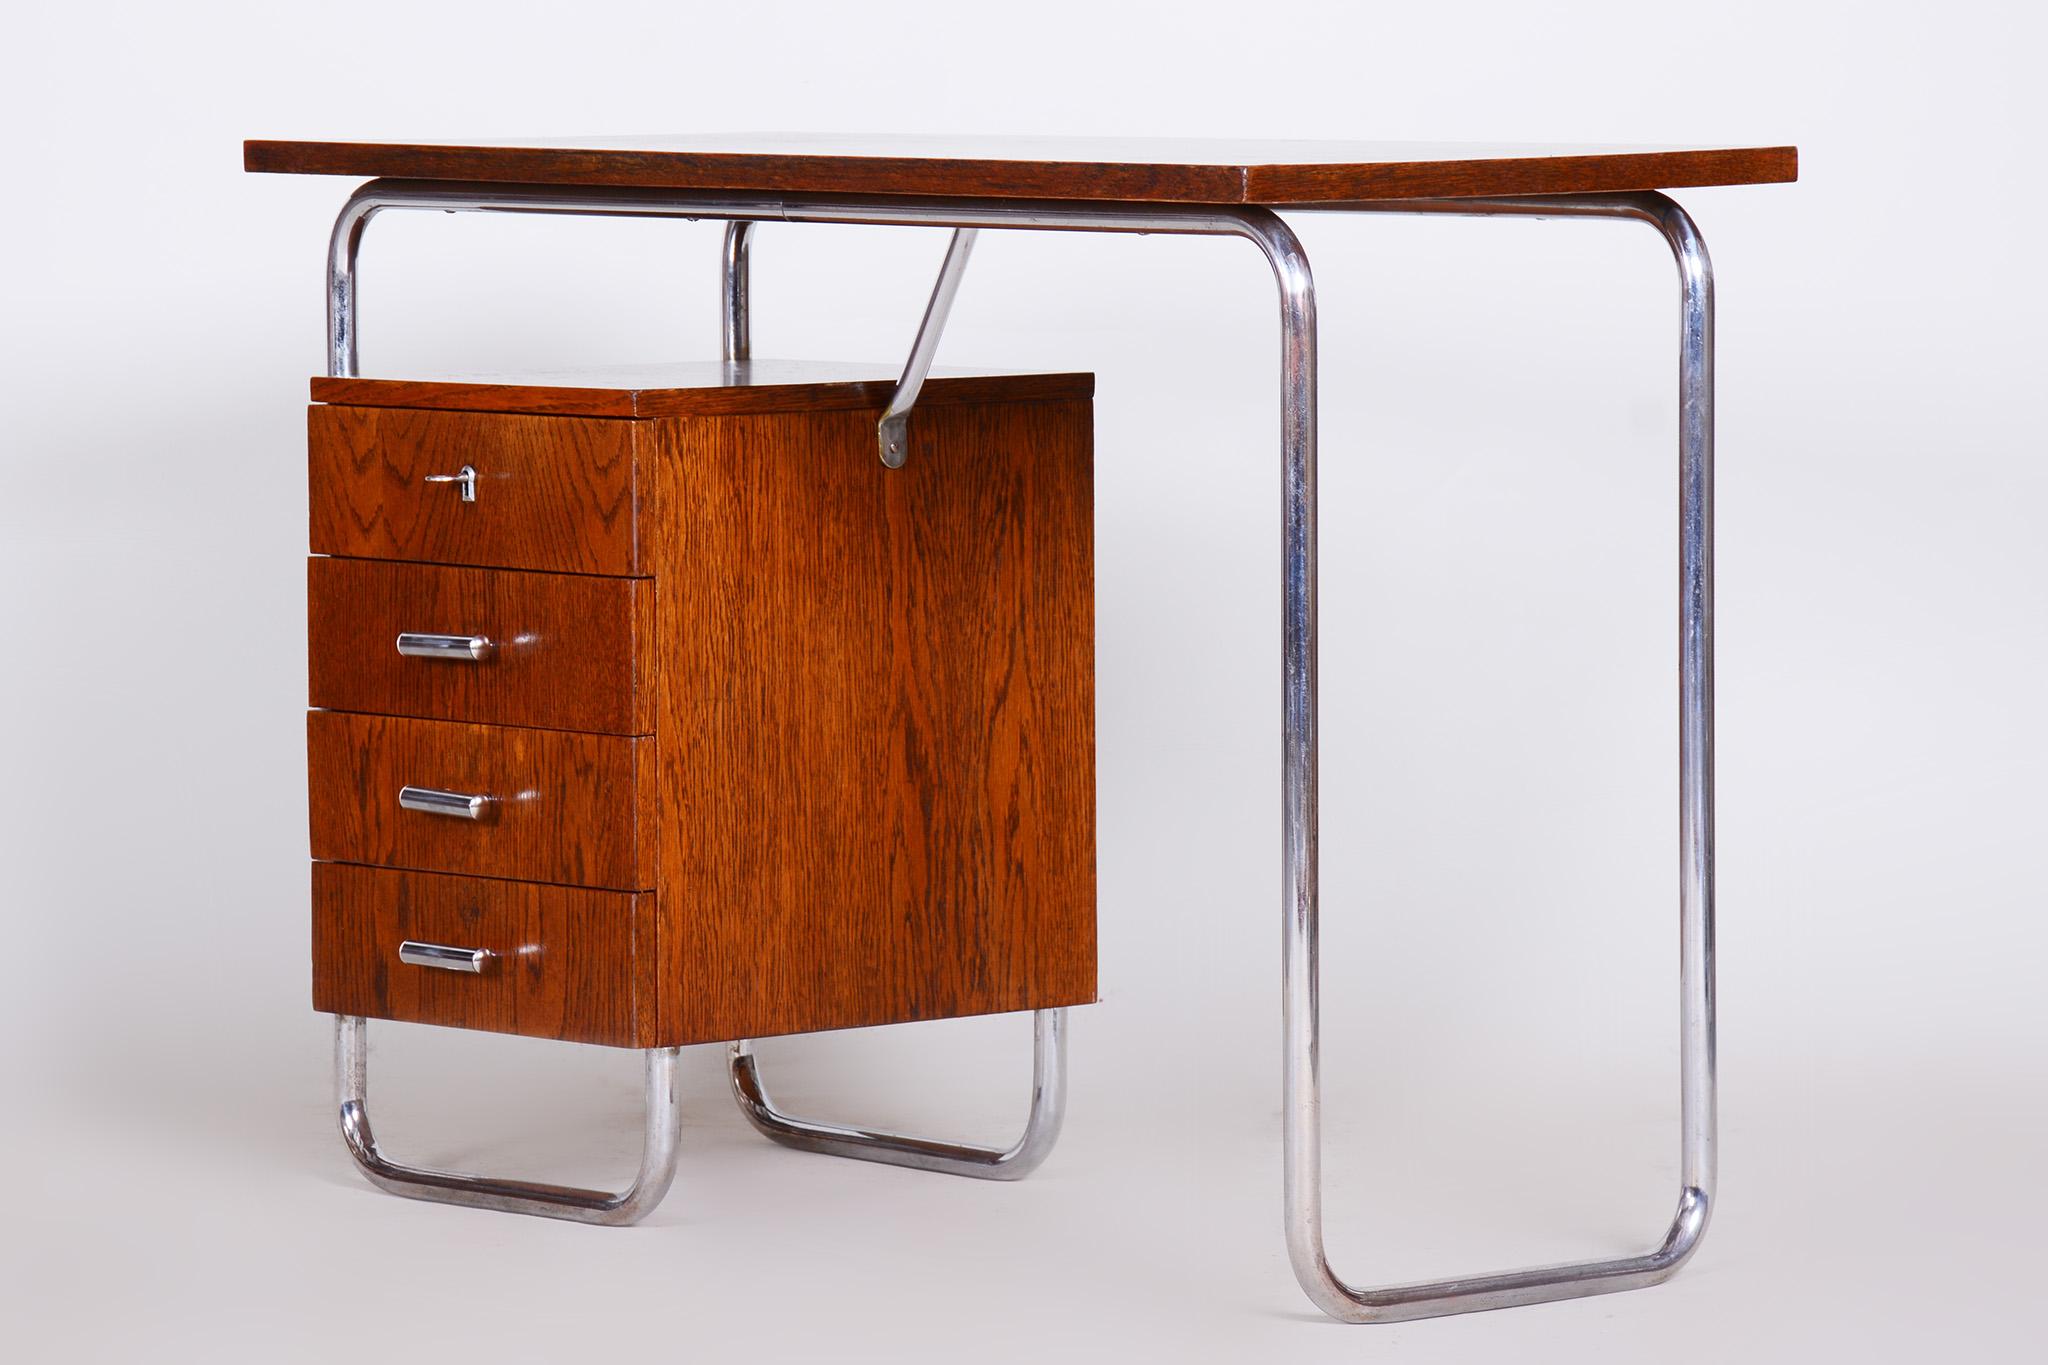 20th Century Oak Writing Desk Made in 1930s Czechia by Robert Slezak, Bauhaus Style, Restored